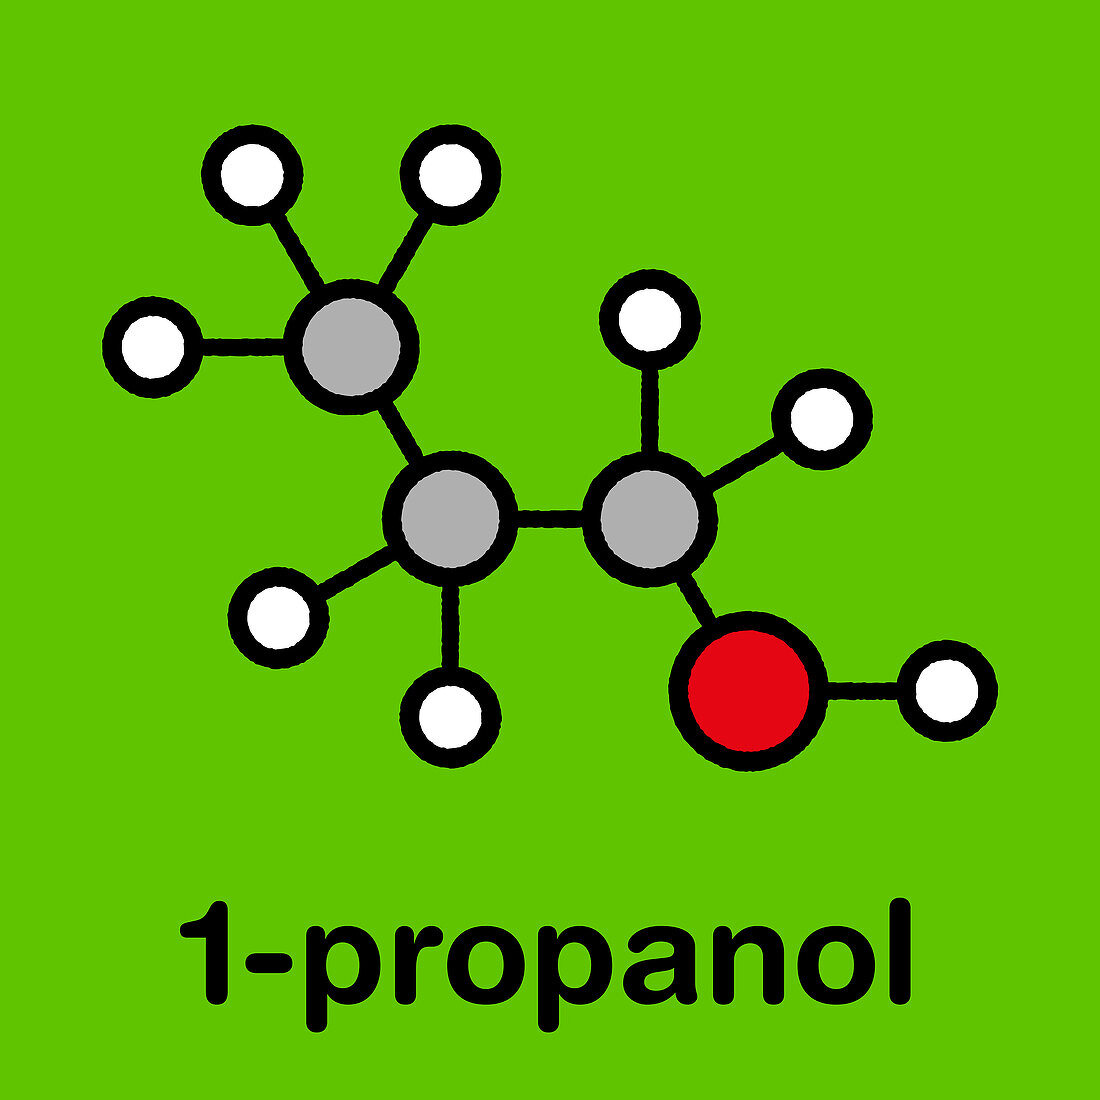 Propanol solvent molecule, illustration